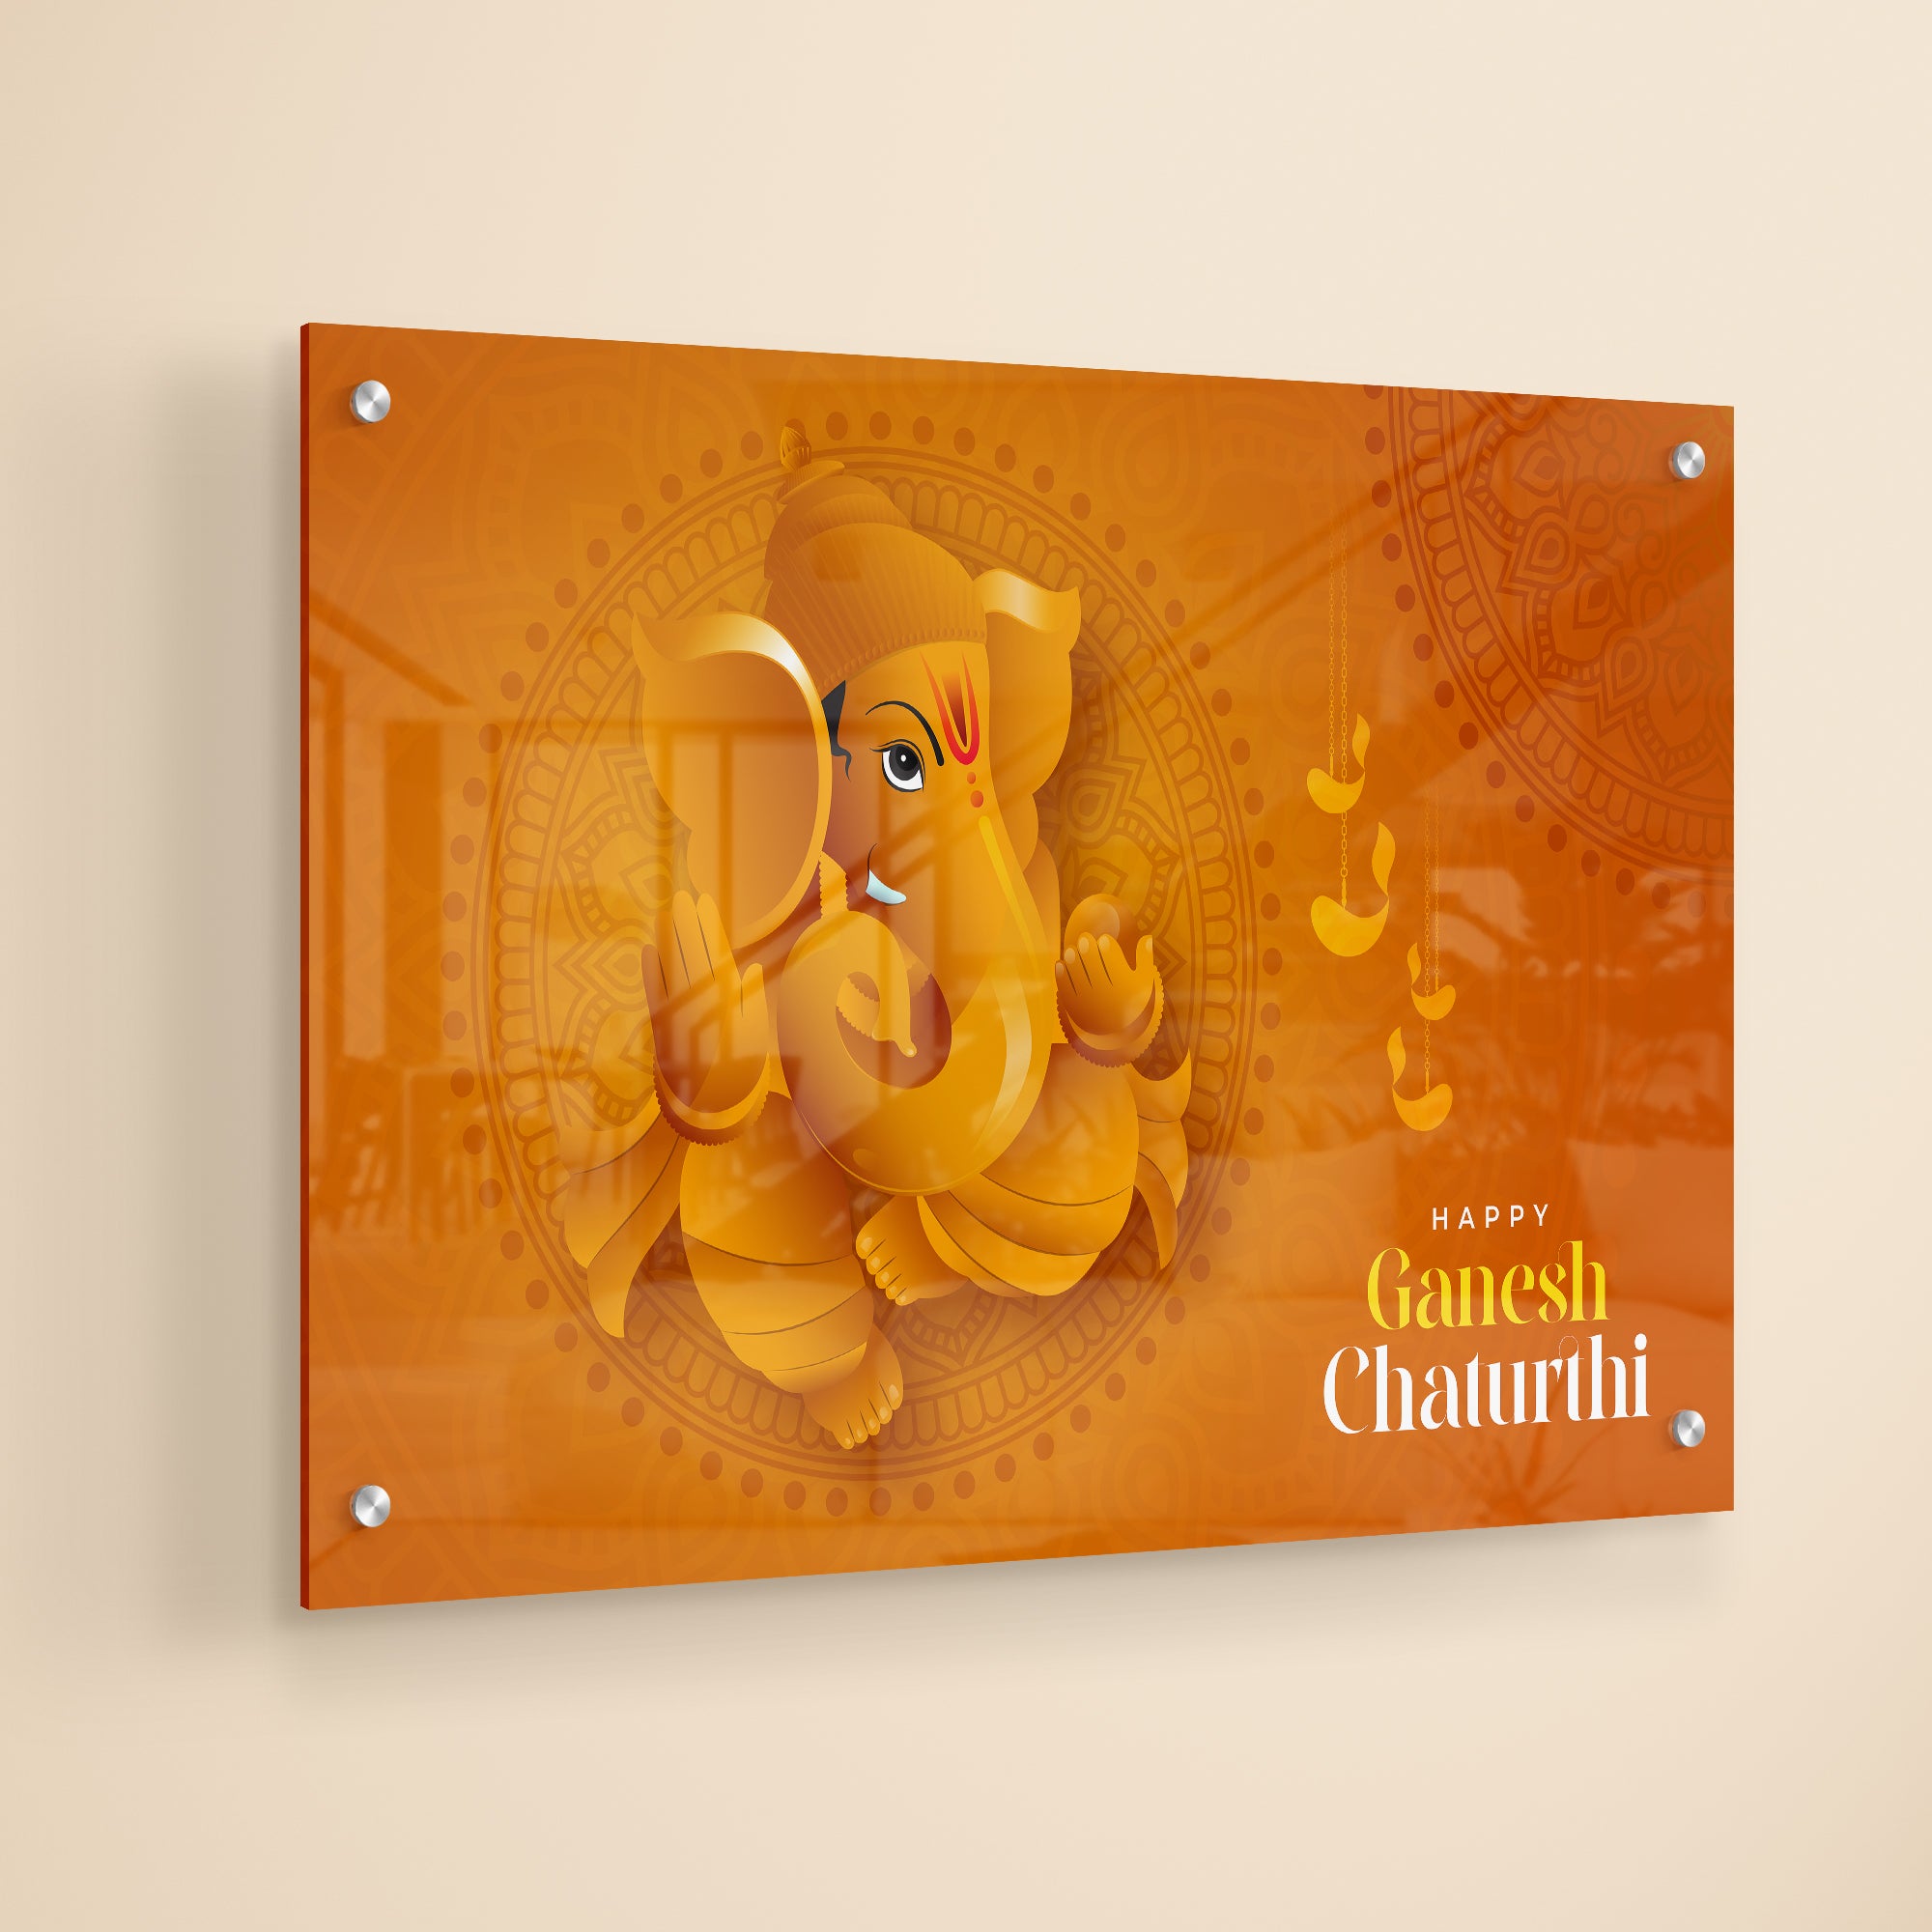 Happy Ganesh Chaturthi Acrylic Wall Painting